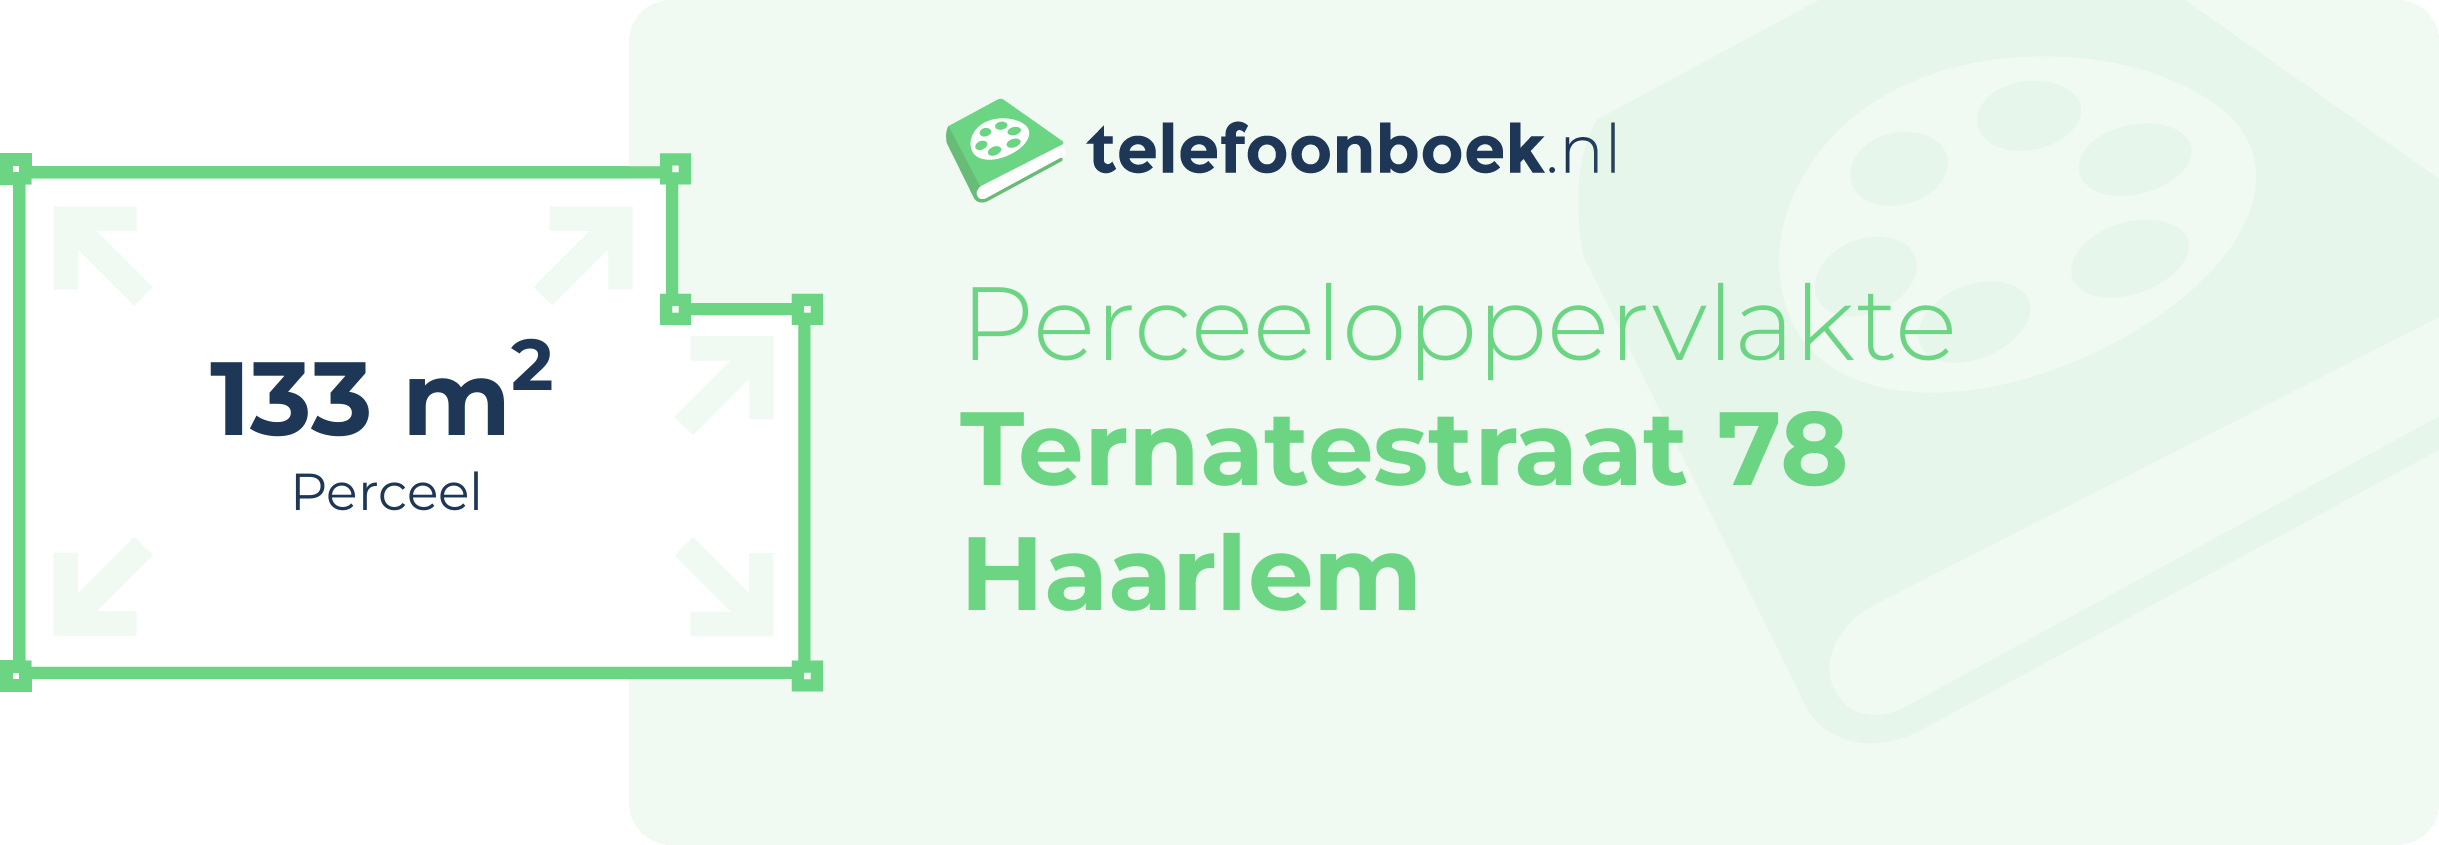 Perceeloppervlakte Ternatestraat 78 Haarlem